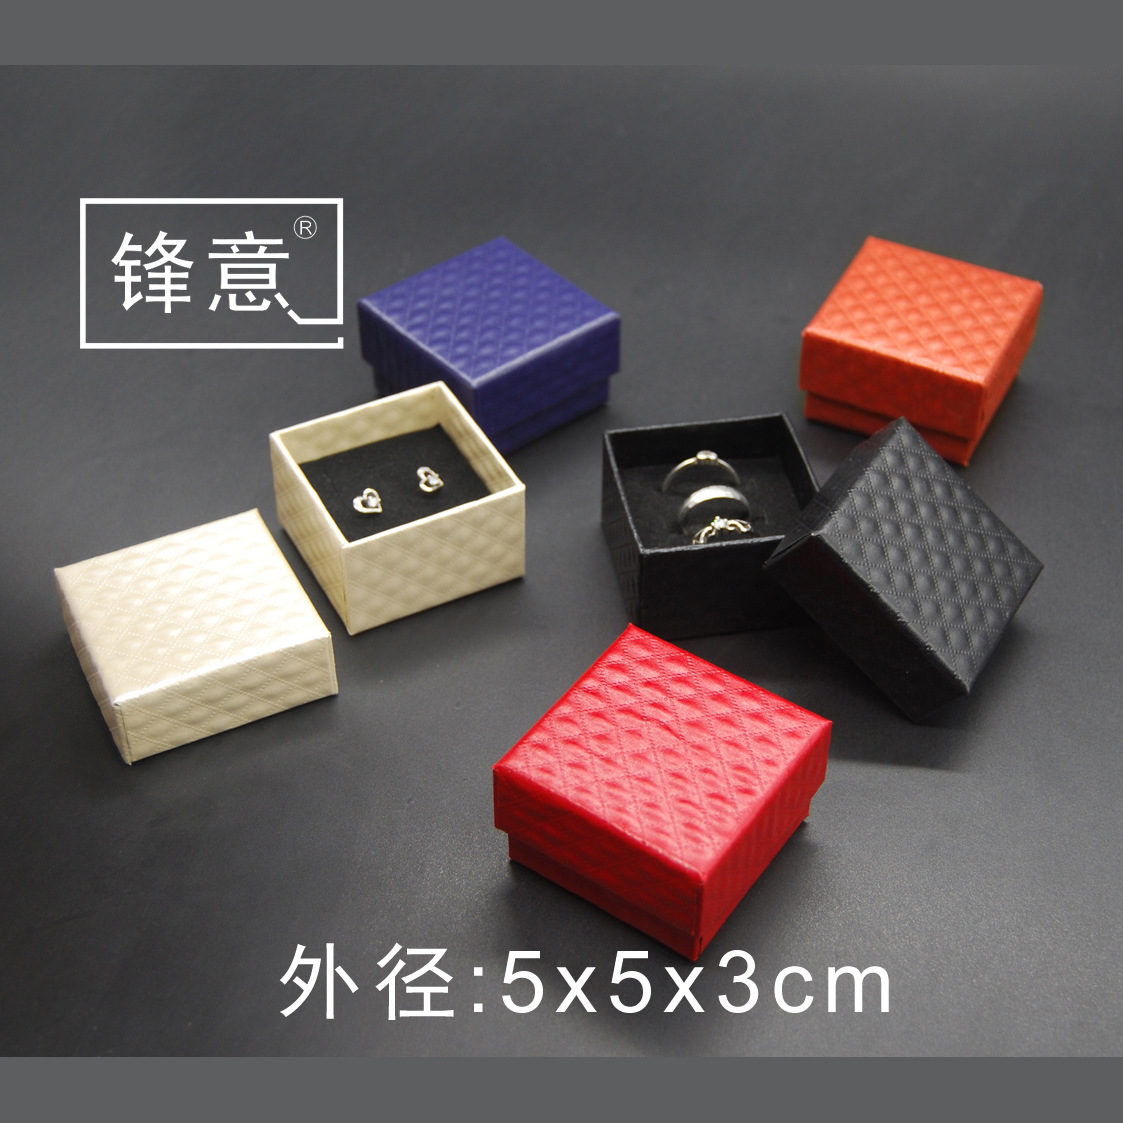 5x5x3仿皮首饰盒包装盒耳环戒指盒耳钉盒多规格可选工厂直销